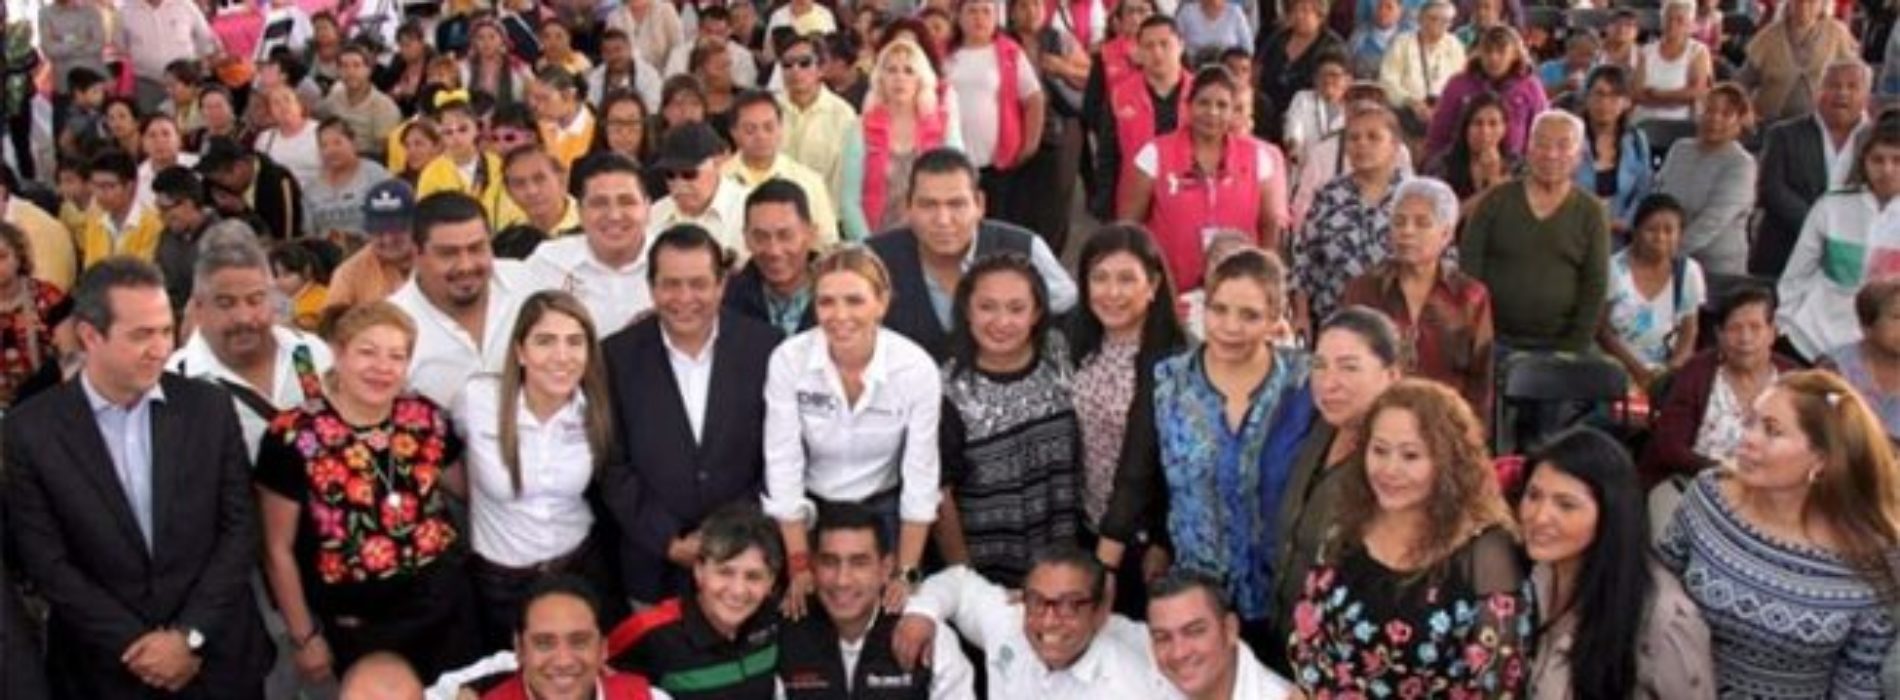 Ivette Morán de Murat entrega apoyos a familias radicadas en
Ciudad Nezahualcóyotl, Estado de México